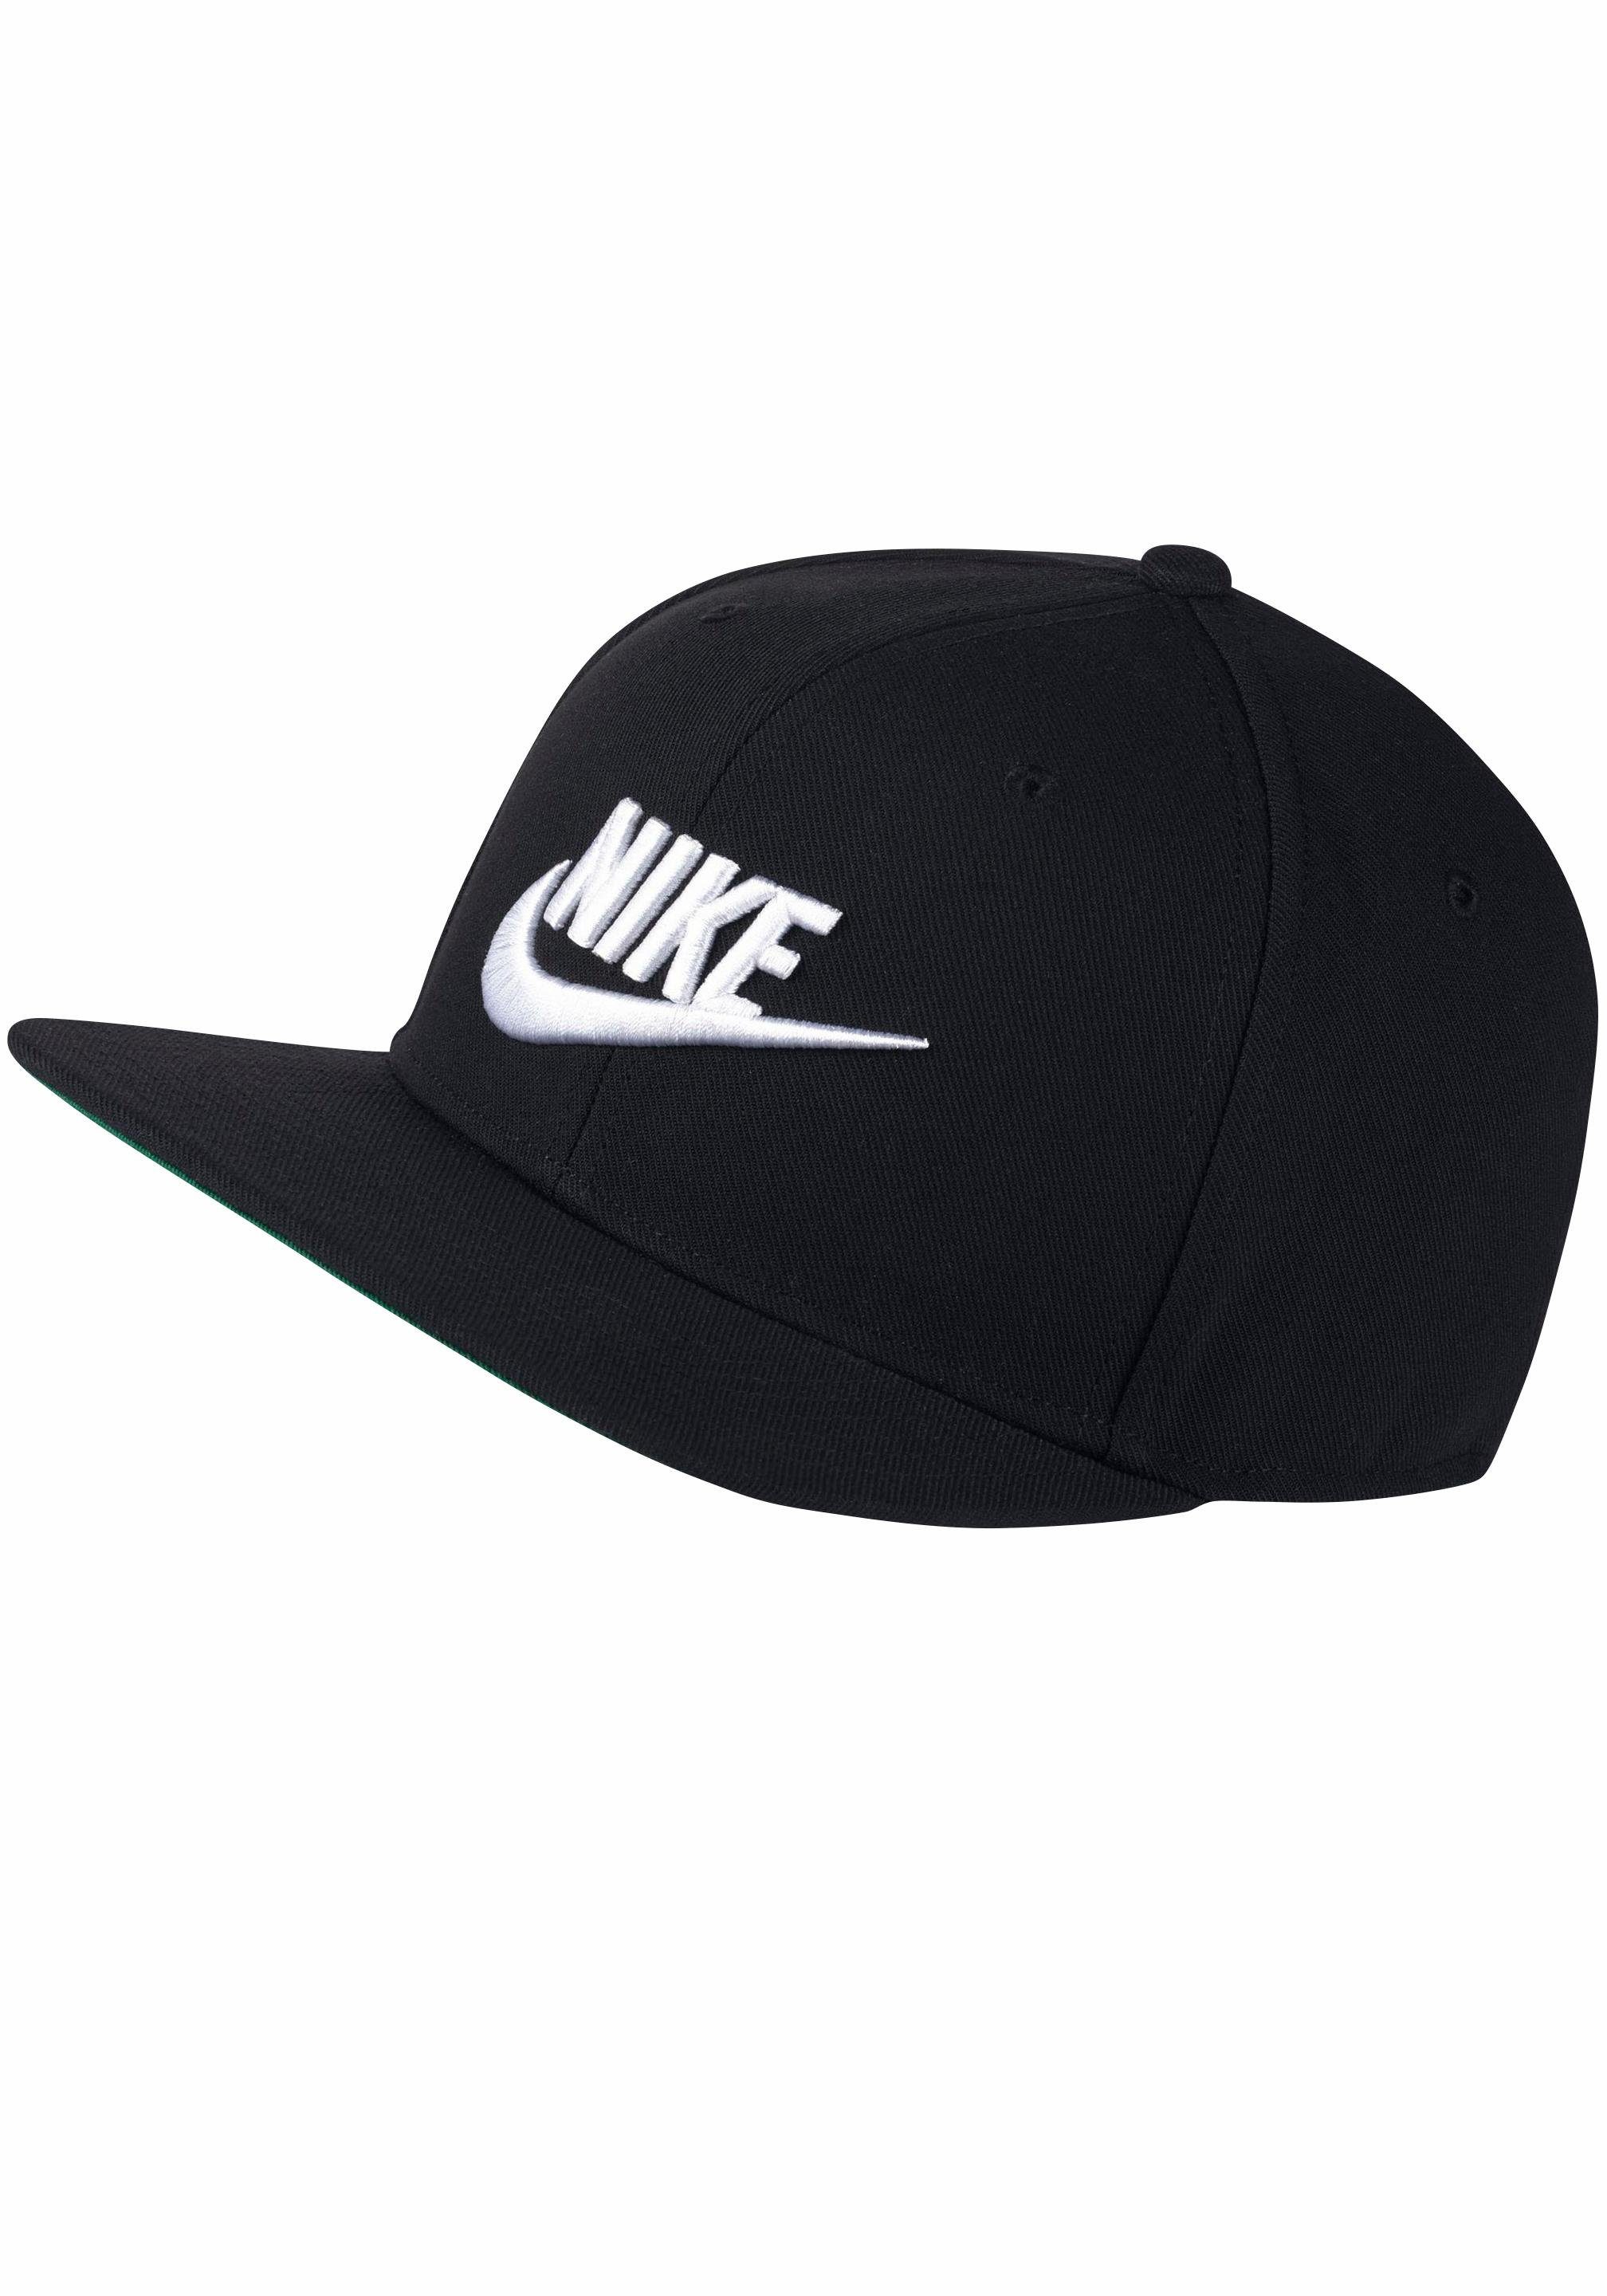 Nike Caps online kaufen » Nike Cappy | OTTO